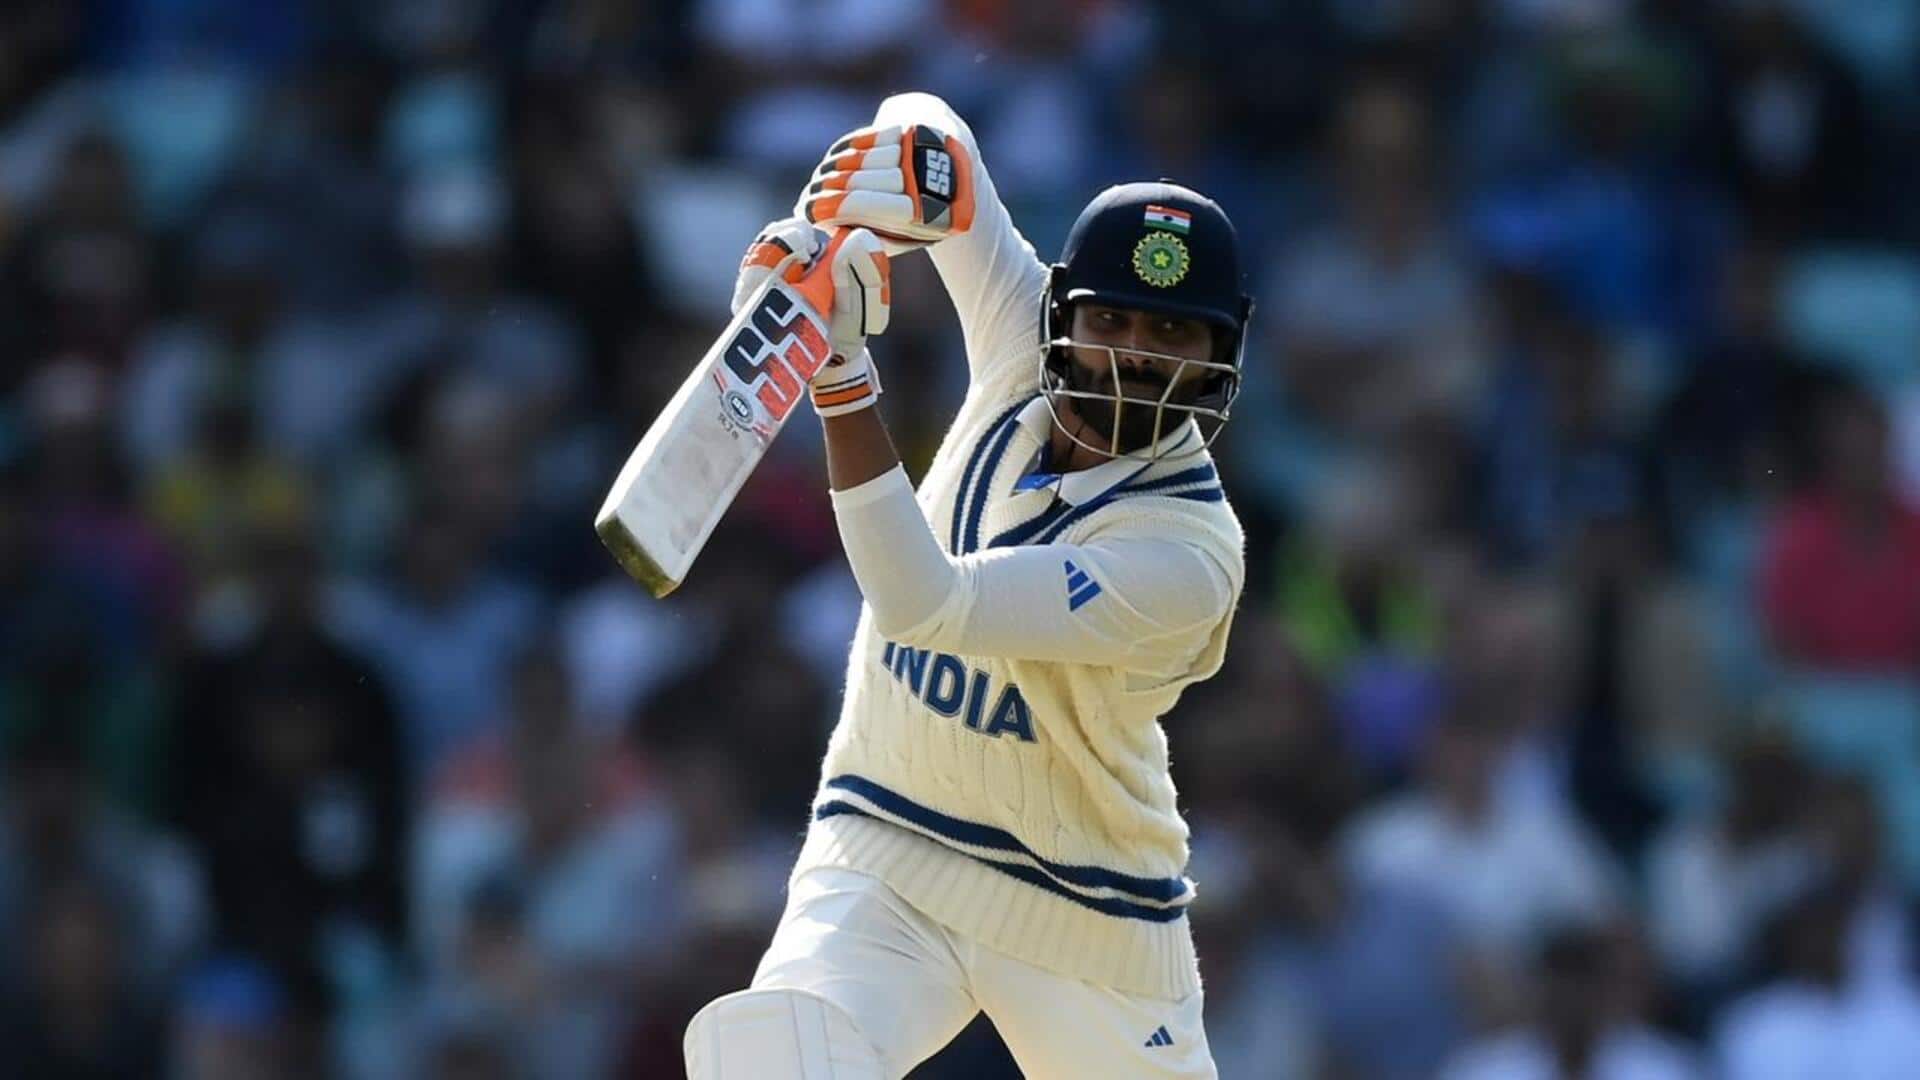 First run-out dismissal for Ravindra Jadeja in Test cricket: Stats